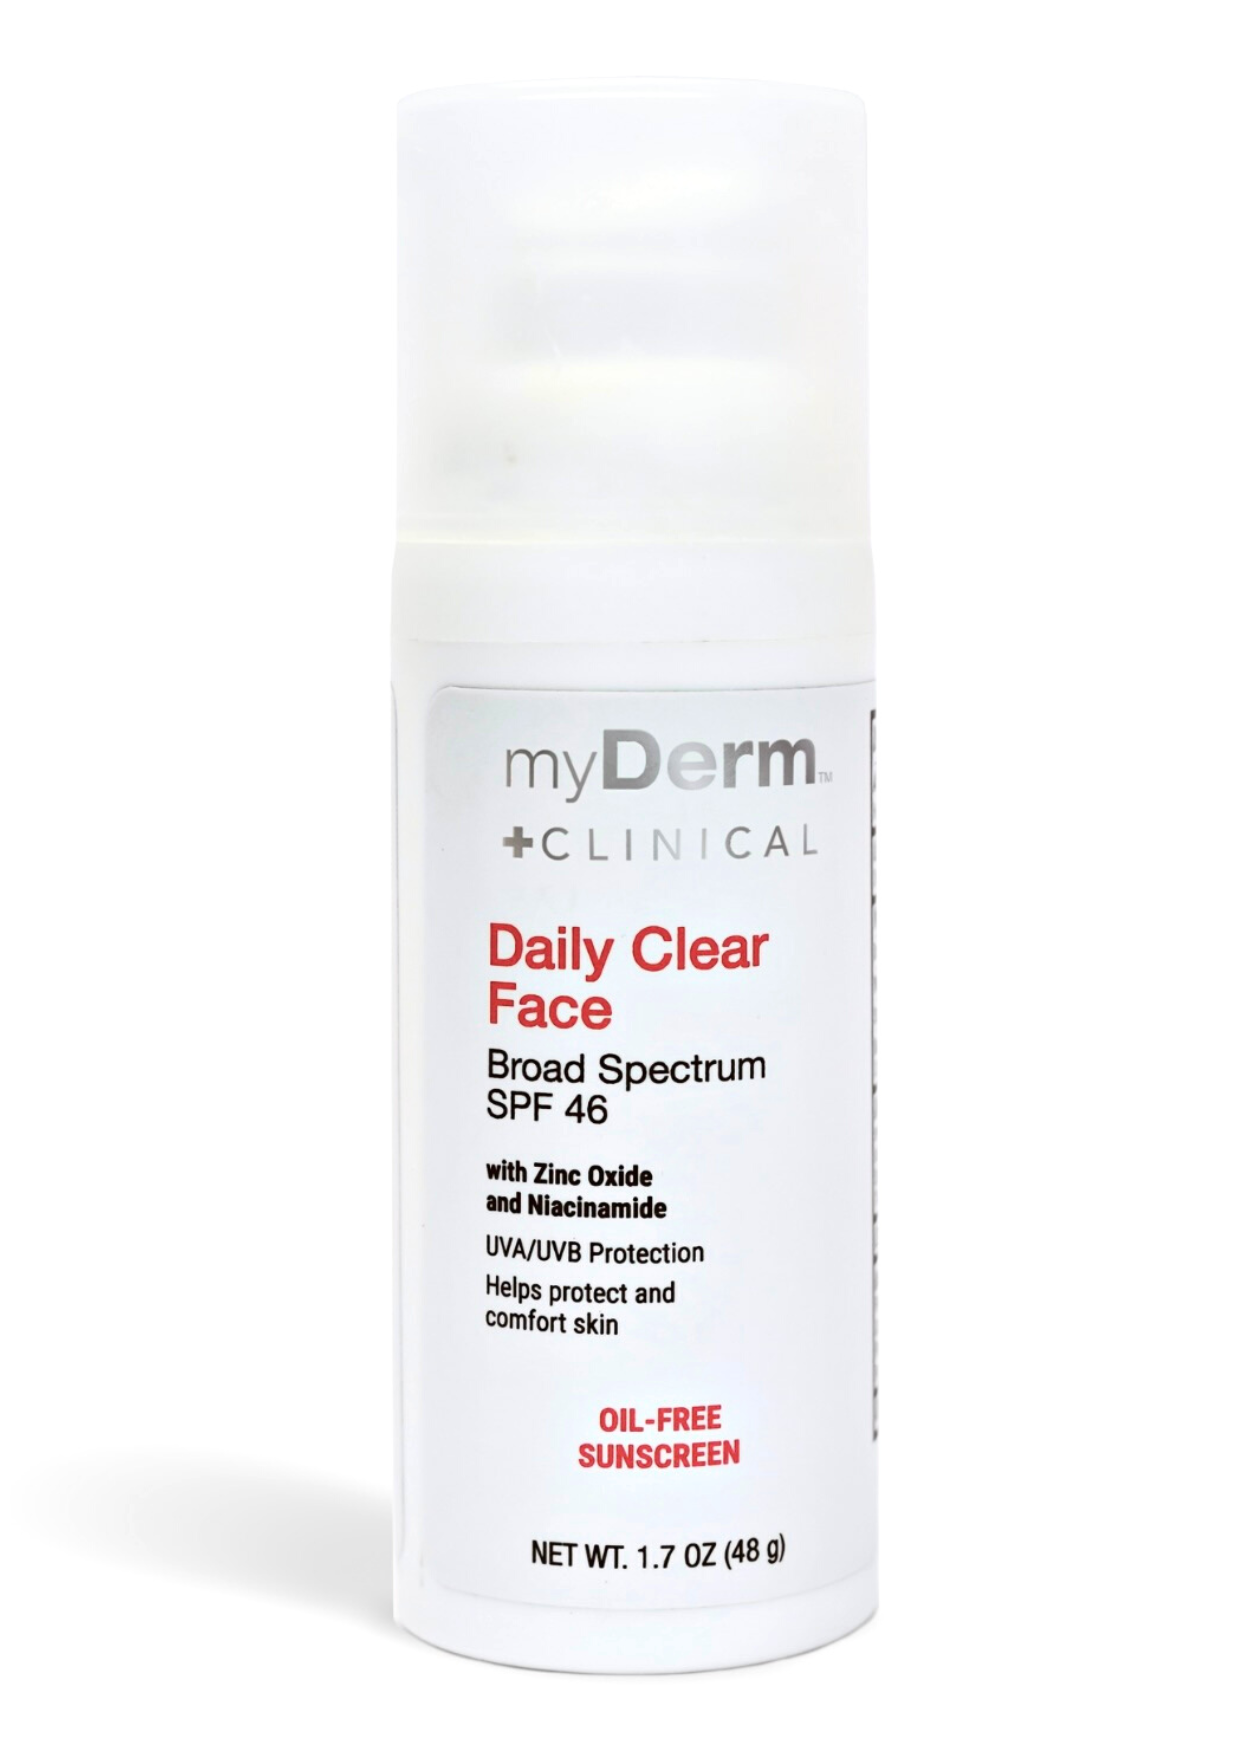 Vitamin C Daily Clear Face SPF 46 Clinical Sunscreen